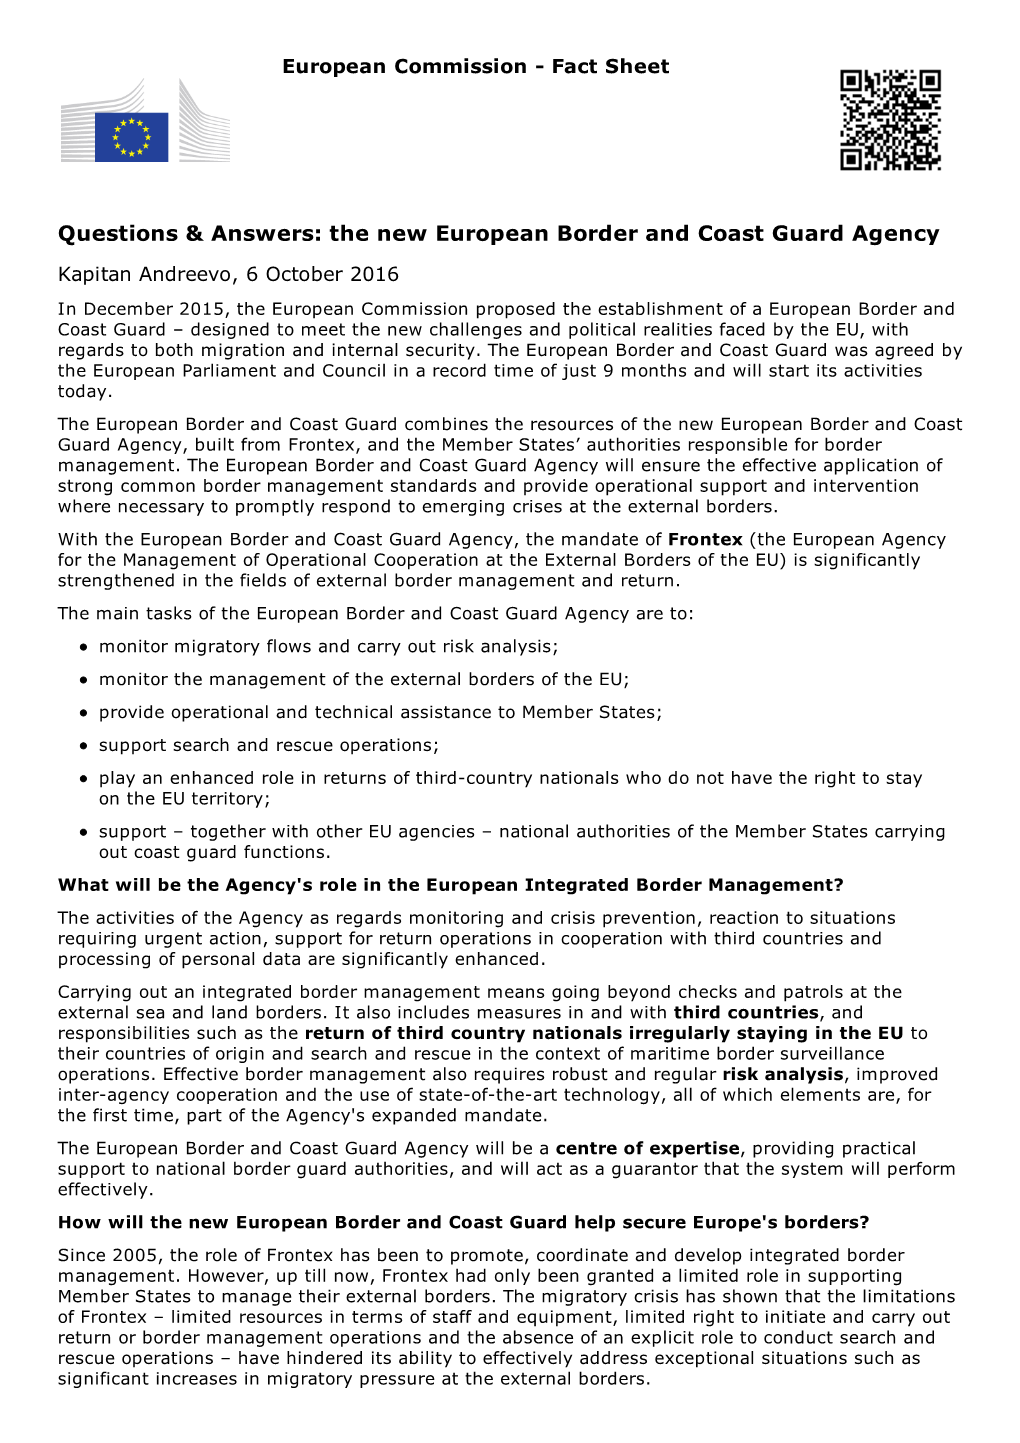 The New European Border and Coast Guard Agency